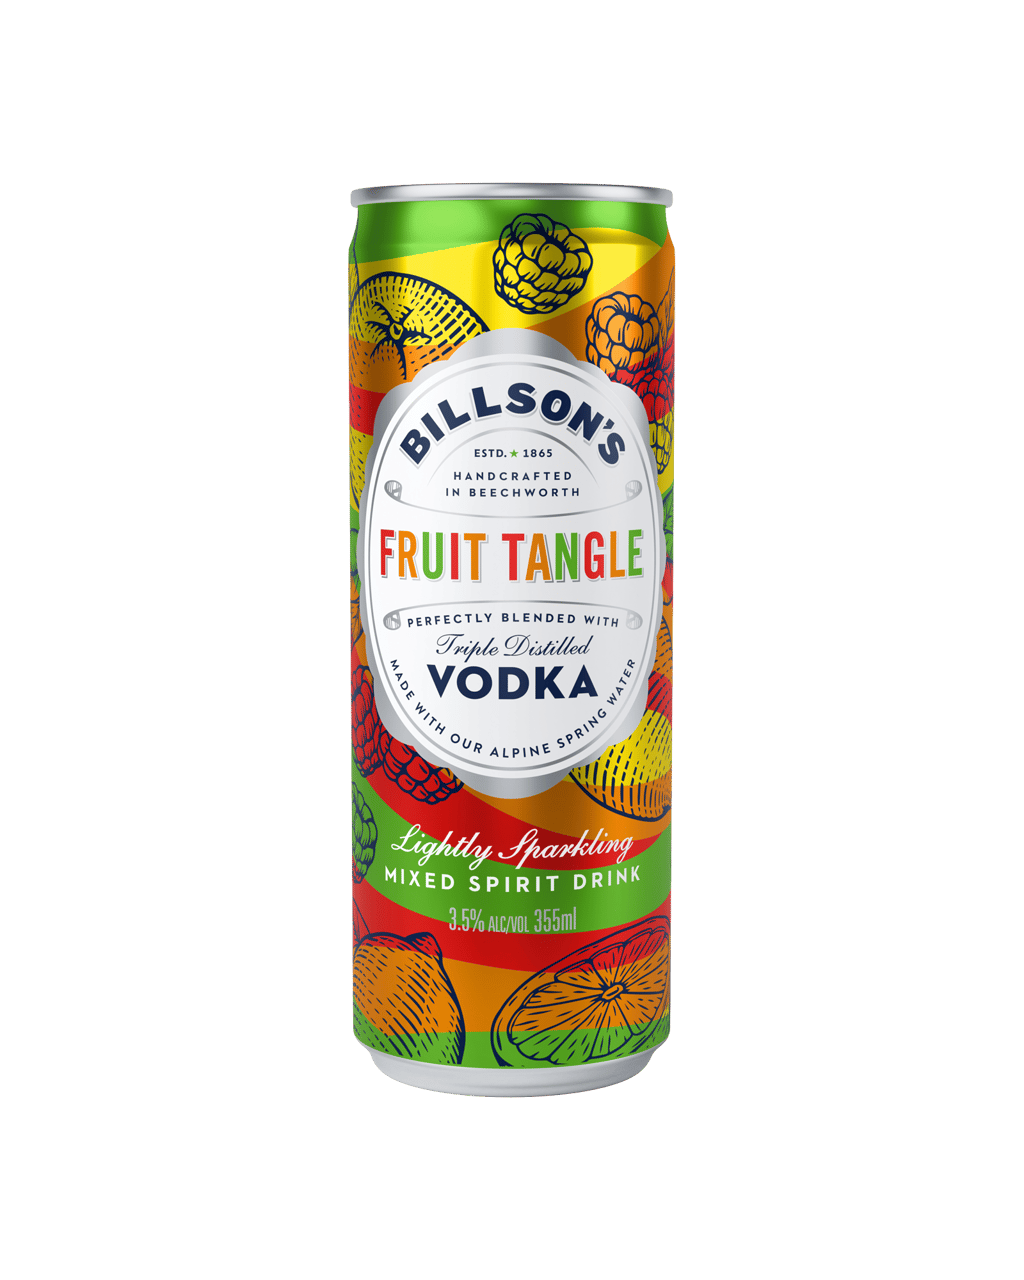 Image - Vodka Fruit Tangle by Billson's